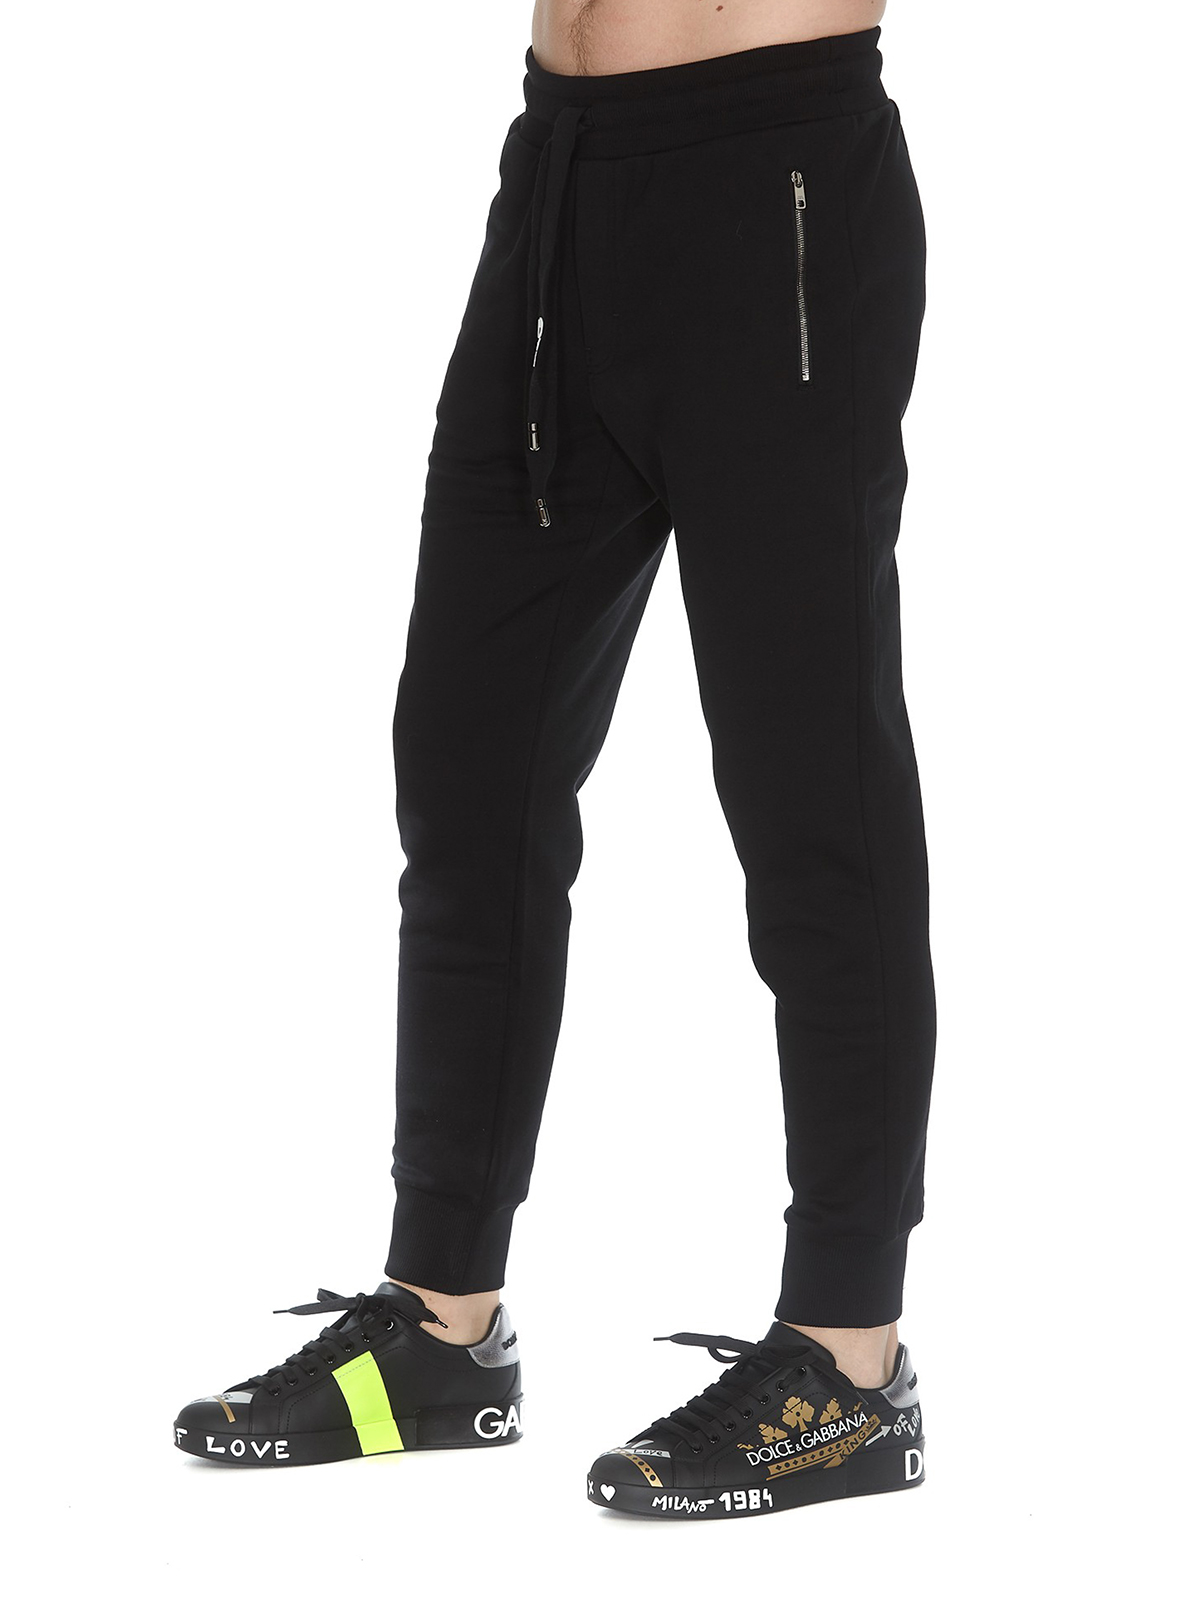 Tracksuit bottoms Dolce & Gabbana - Solid black cotton jogging pants -  GYFJEZFU7DUN0000